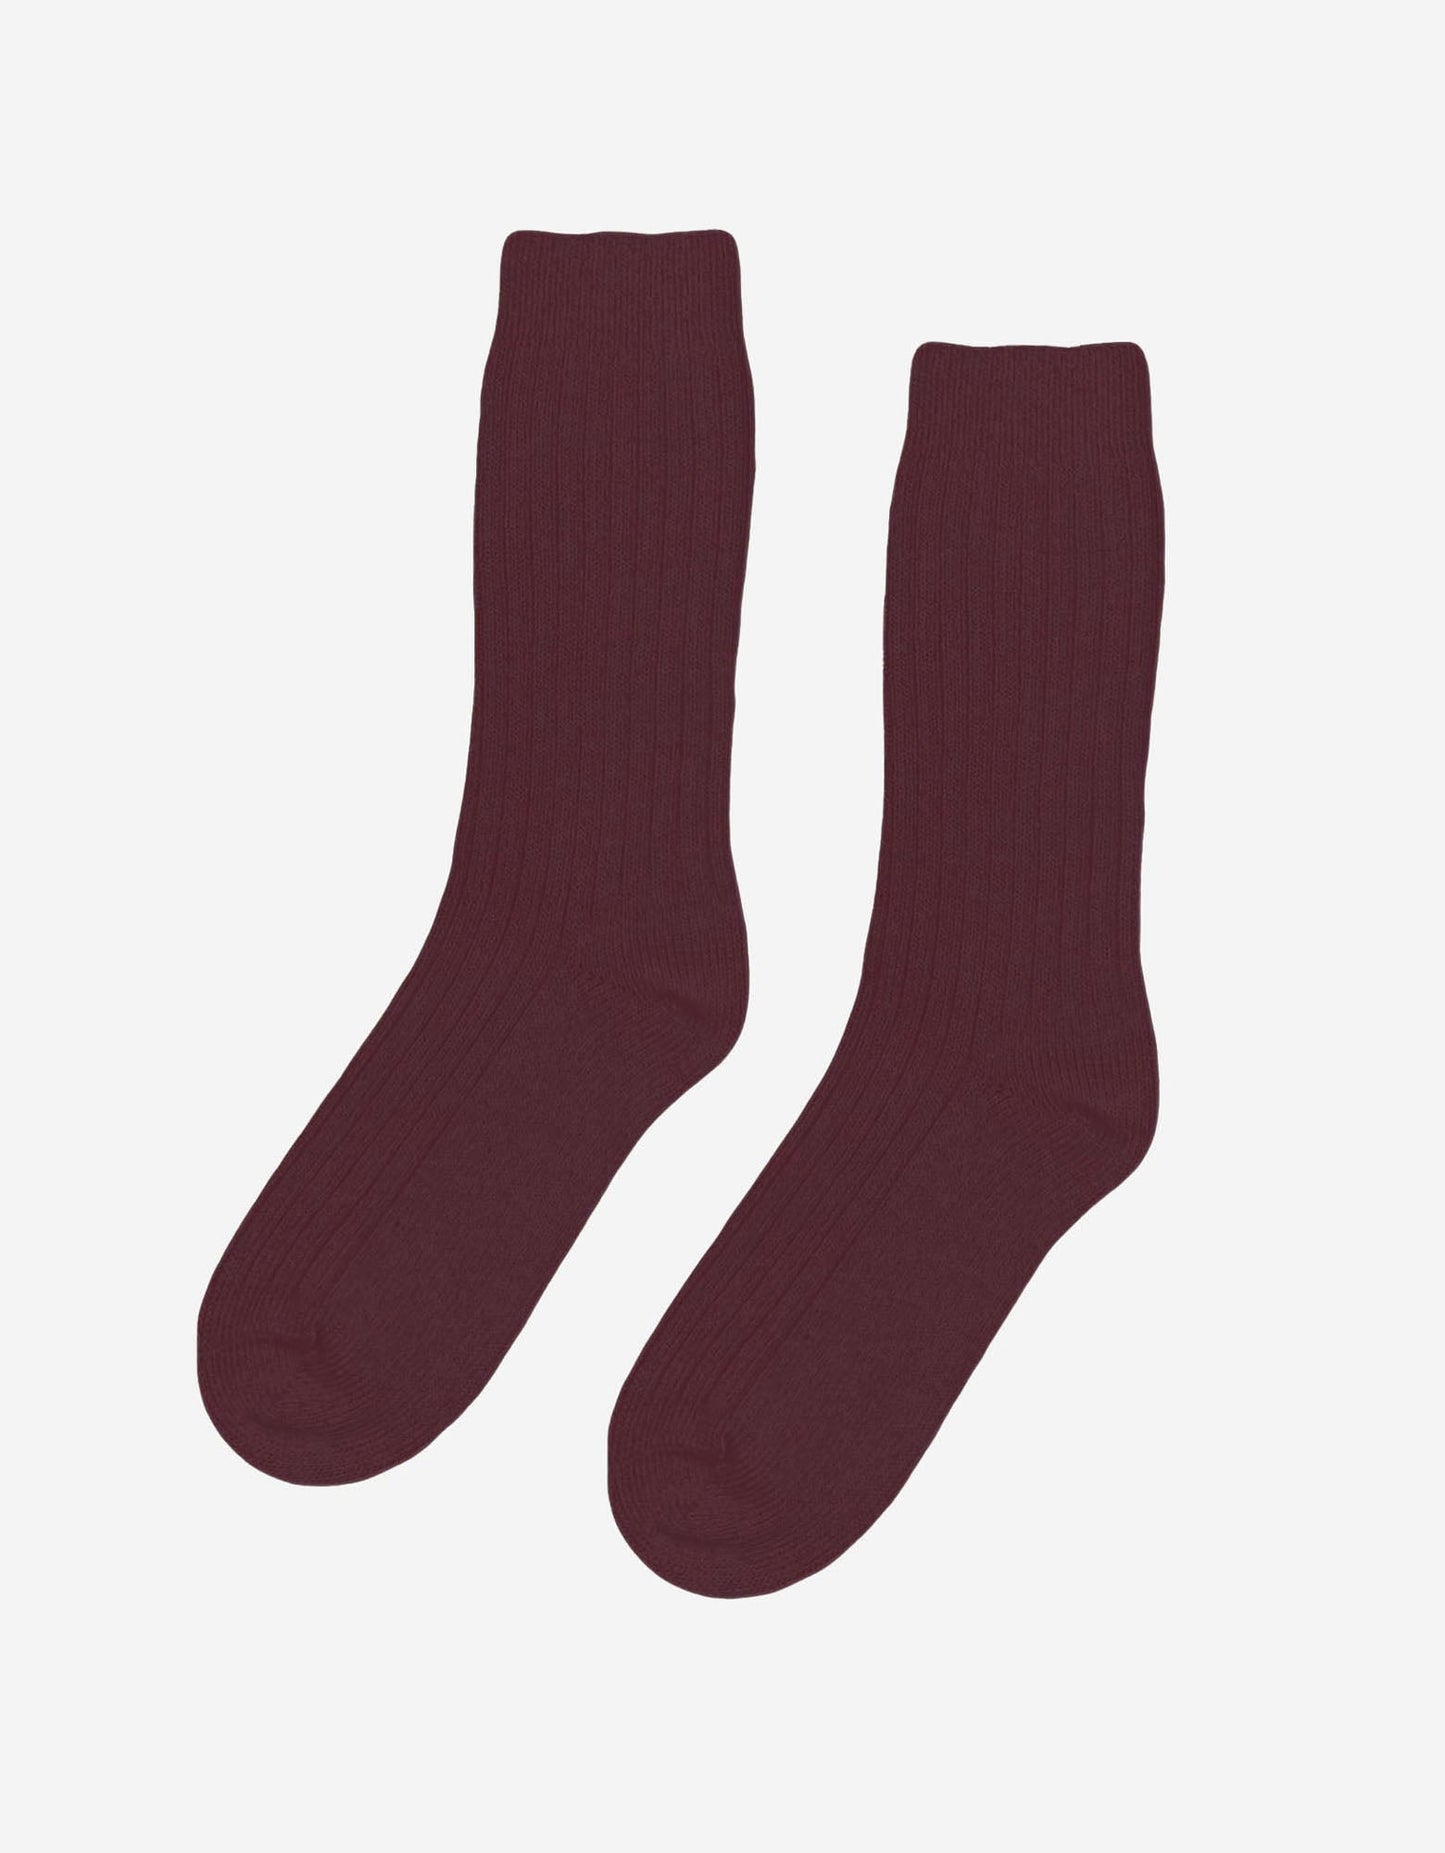 Merino Wool Socks - Oxblood Red